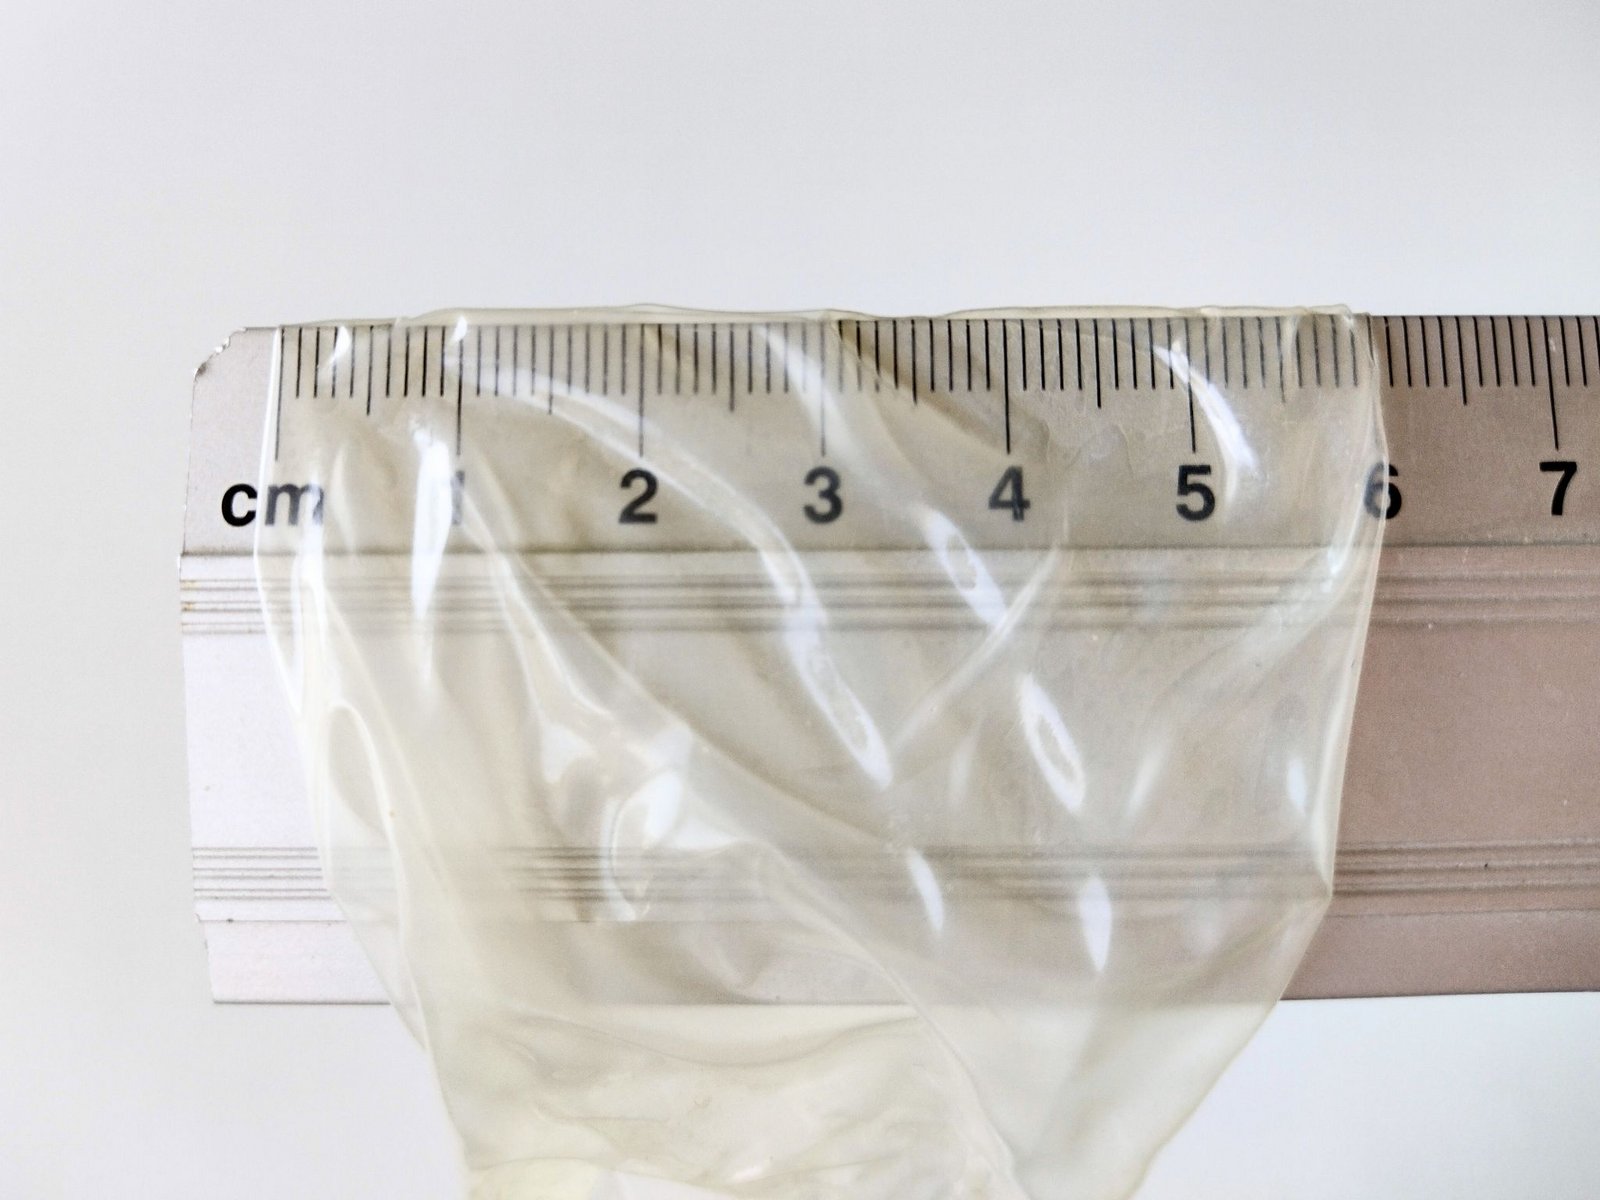 Nominel bredde på et kondom målt med en lineal